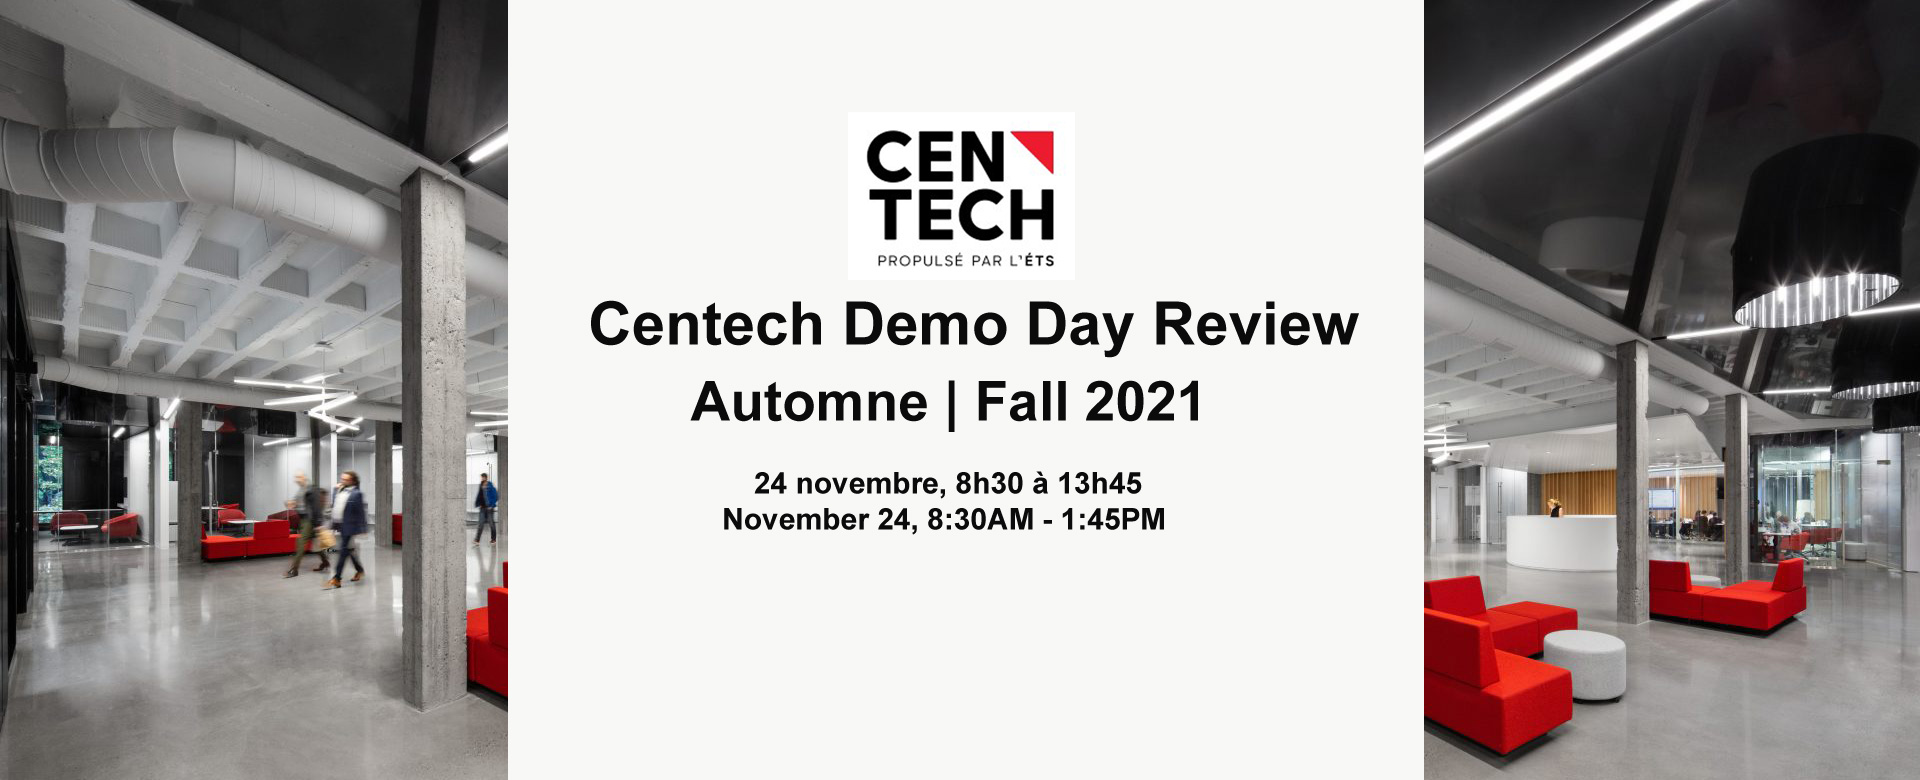 CENTECh-Demo-Day-Review November-2021